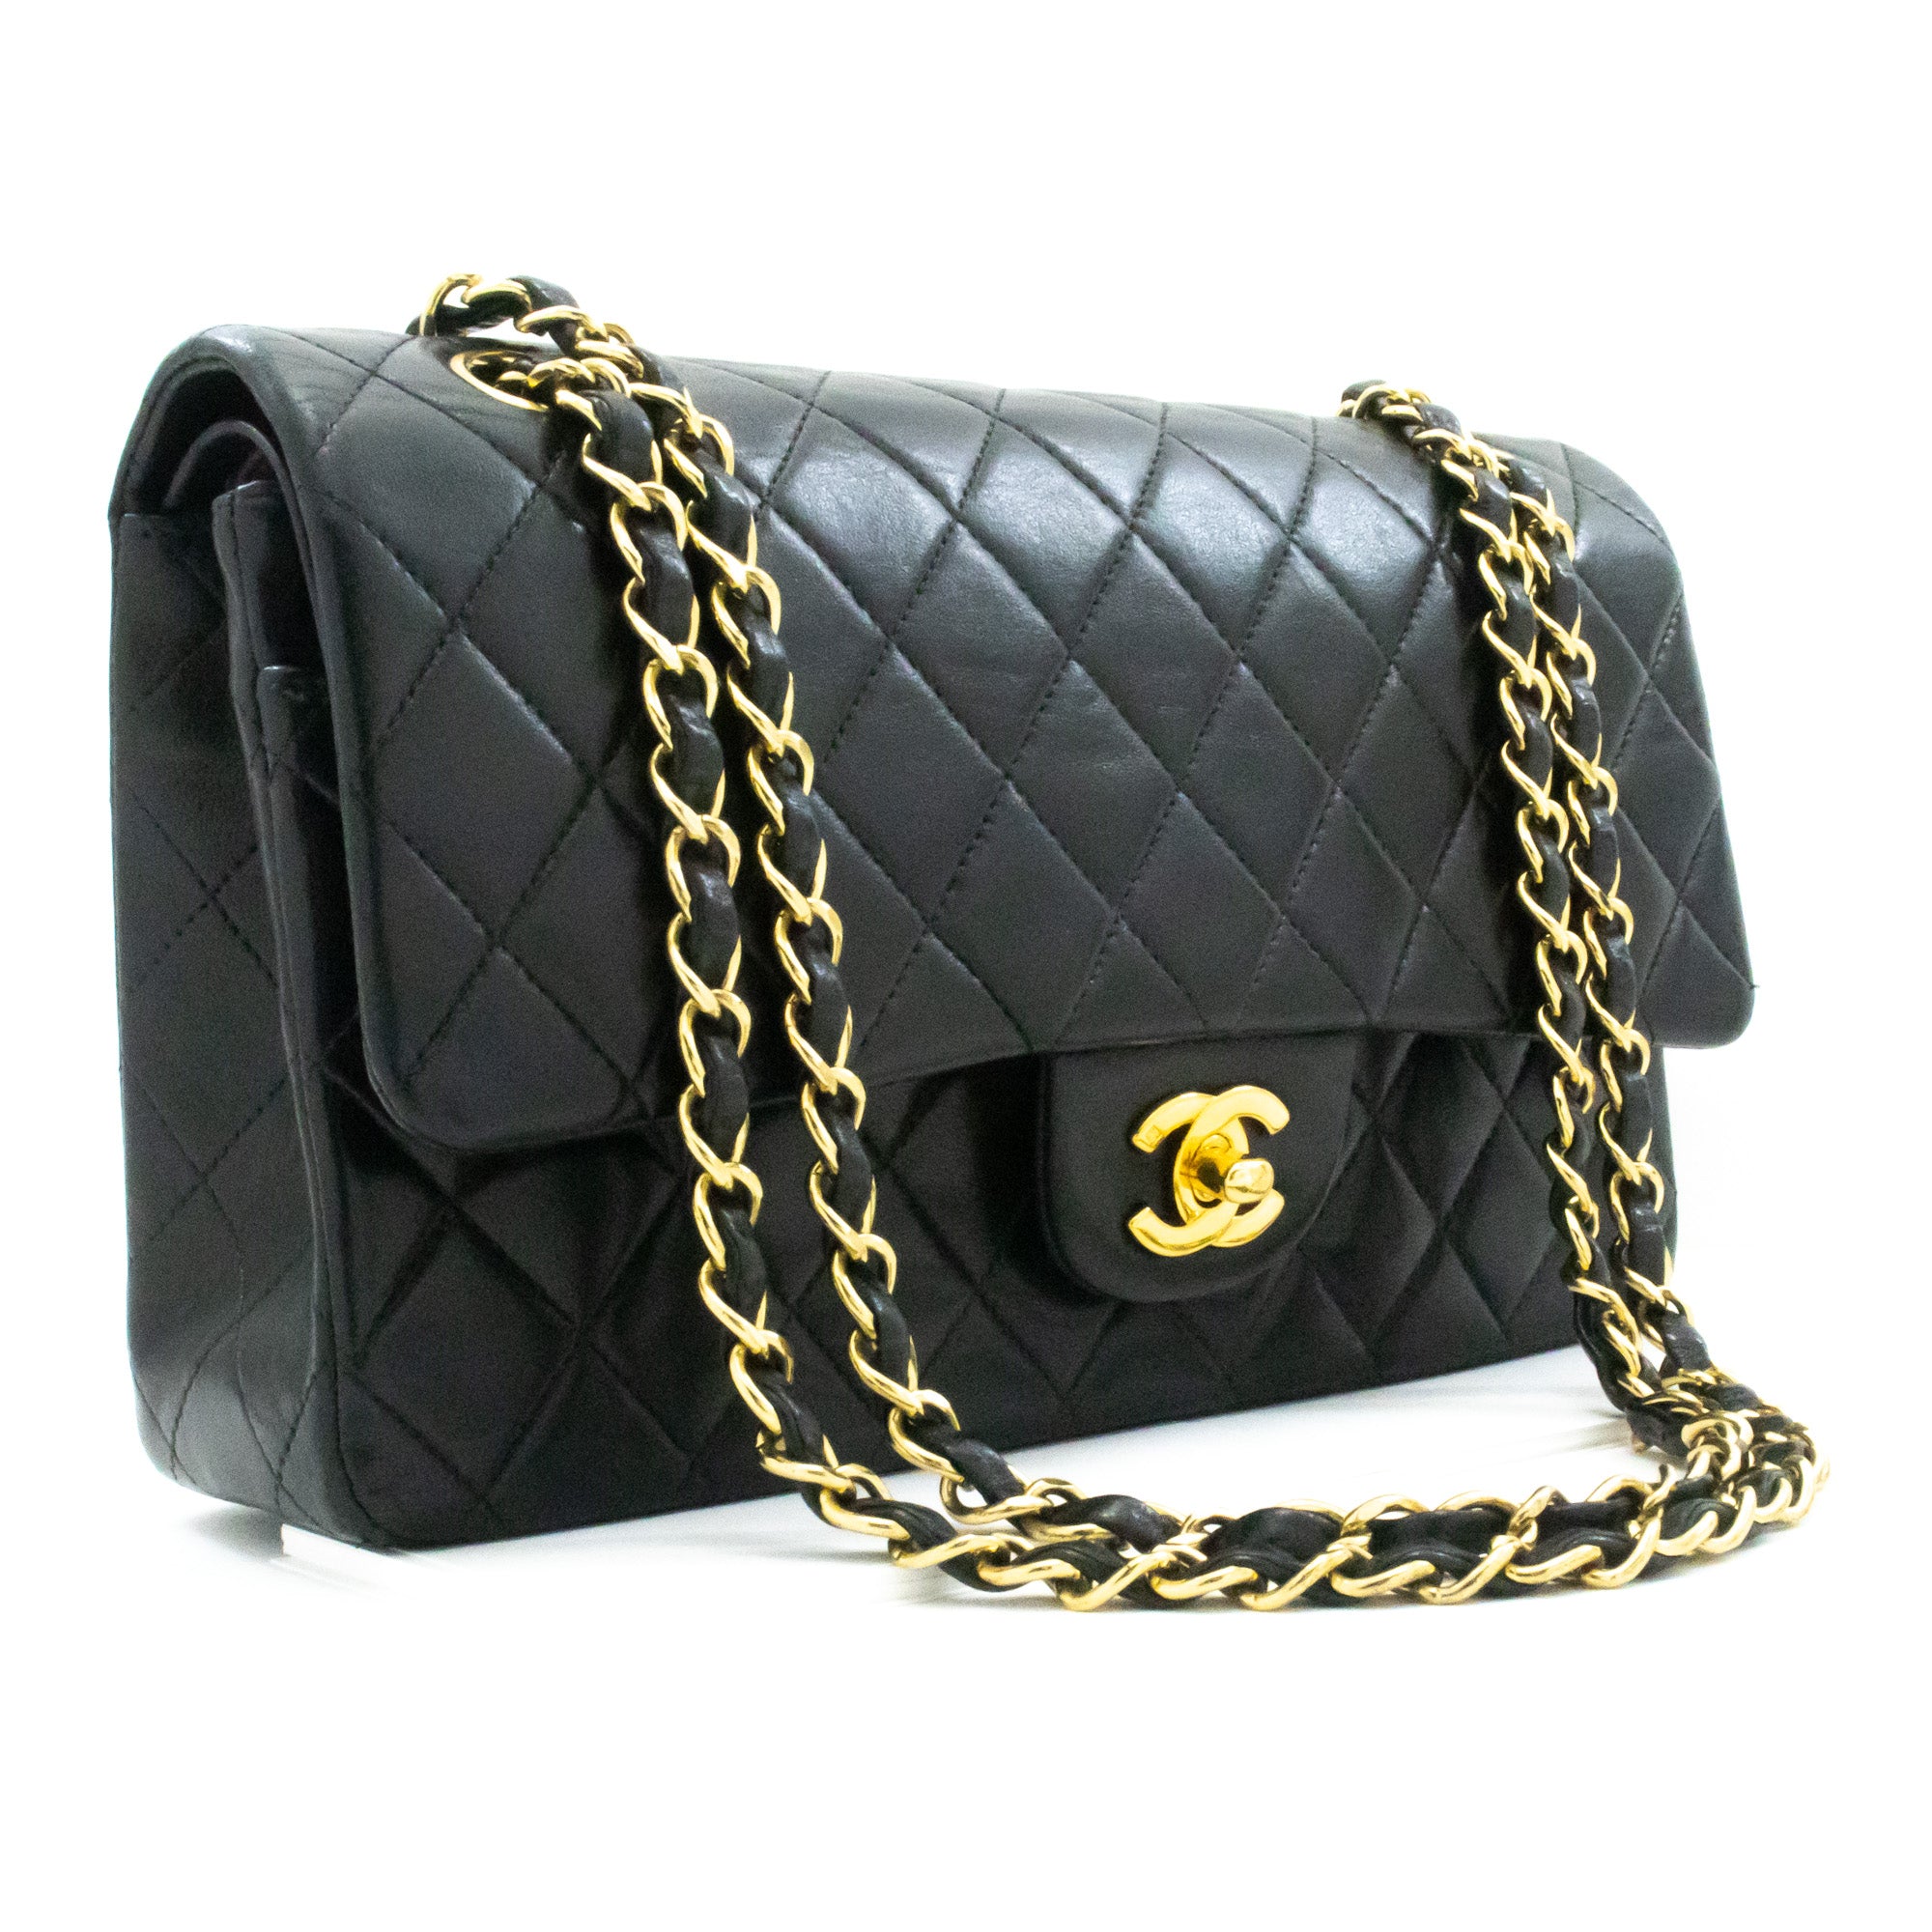 Buy Chanel Handbag Online, New and Used Chanel Handbags For Sale – eurotrash